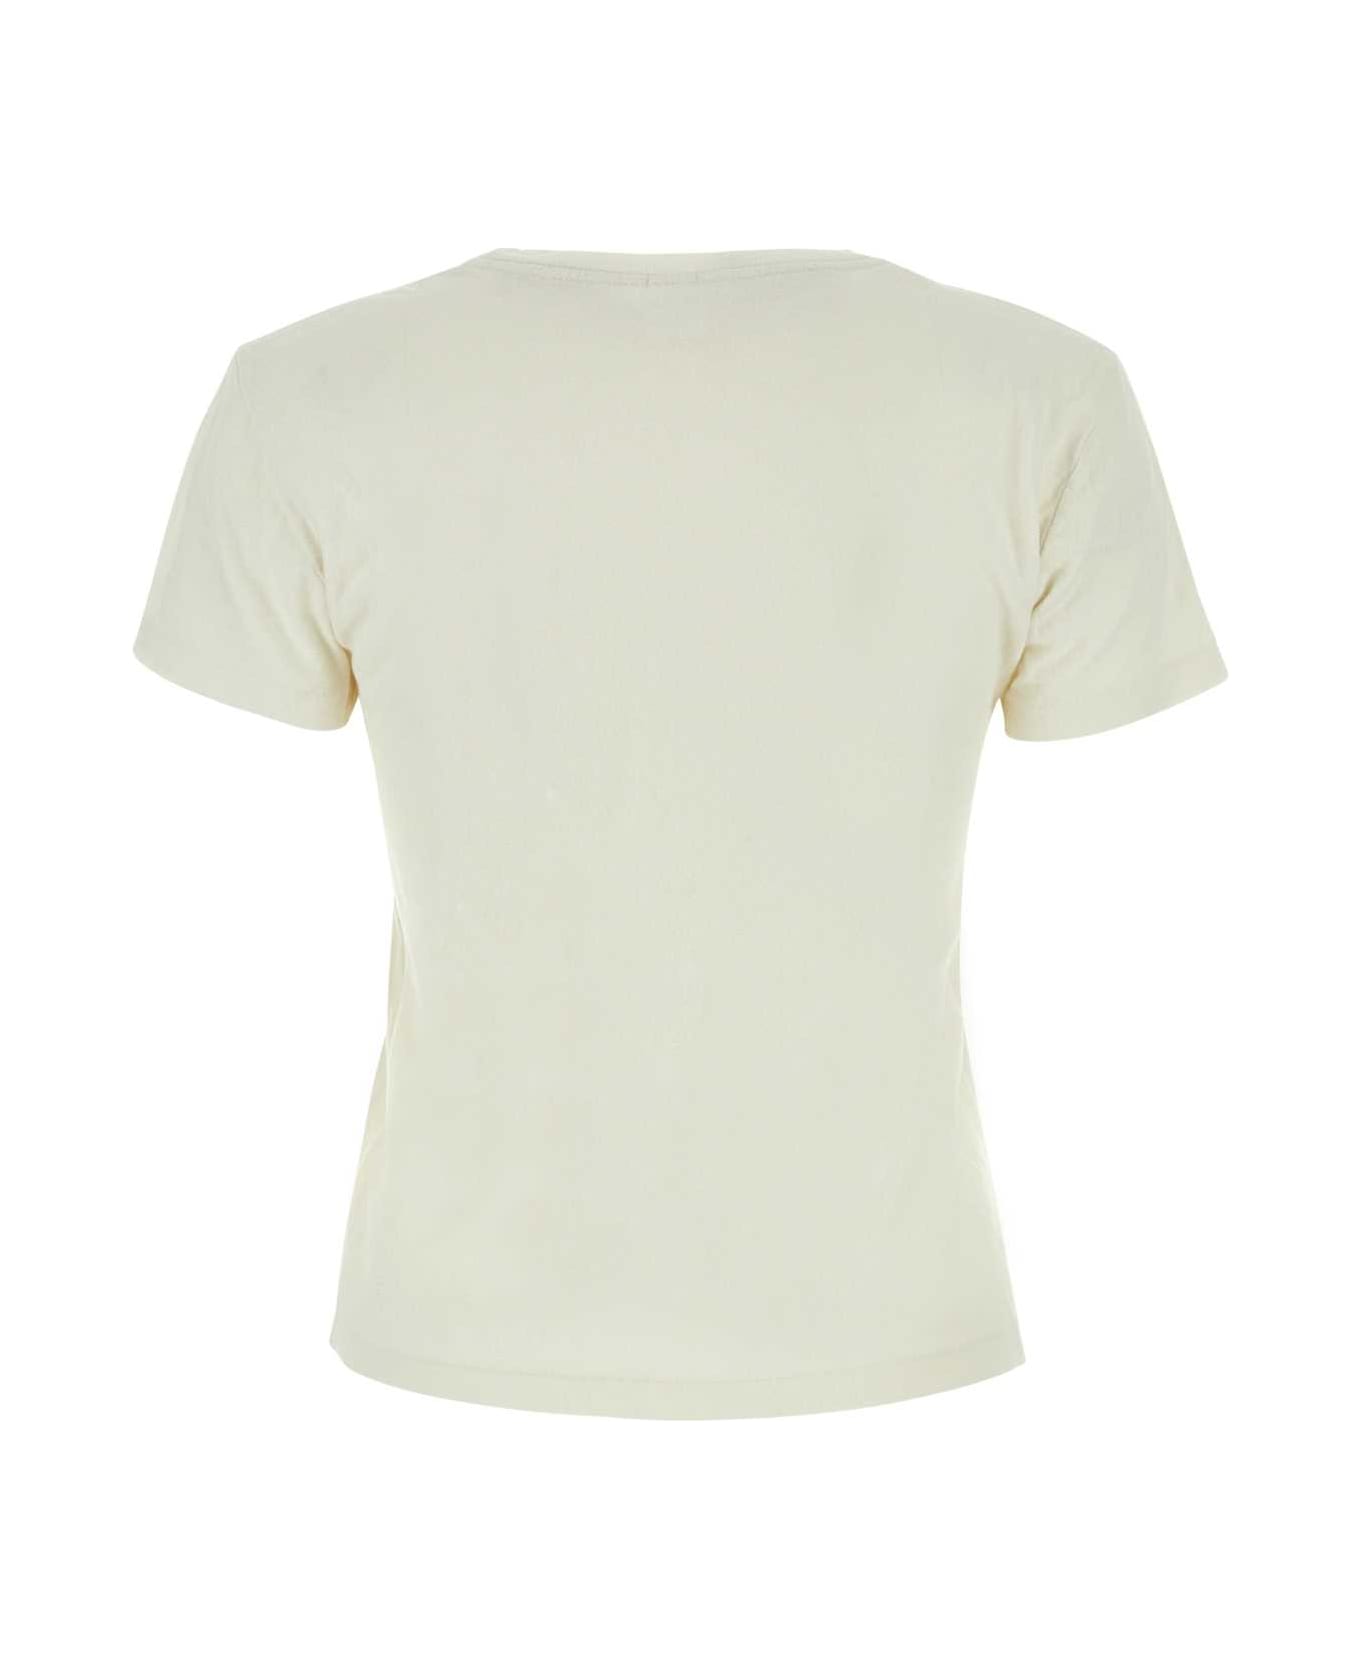 RE/DONE Chalk Cotton T-shirt - VINTAGEWHITE Tシャツ